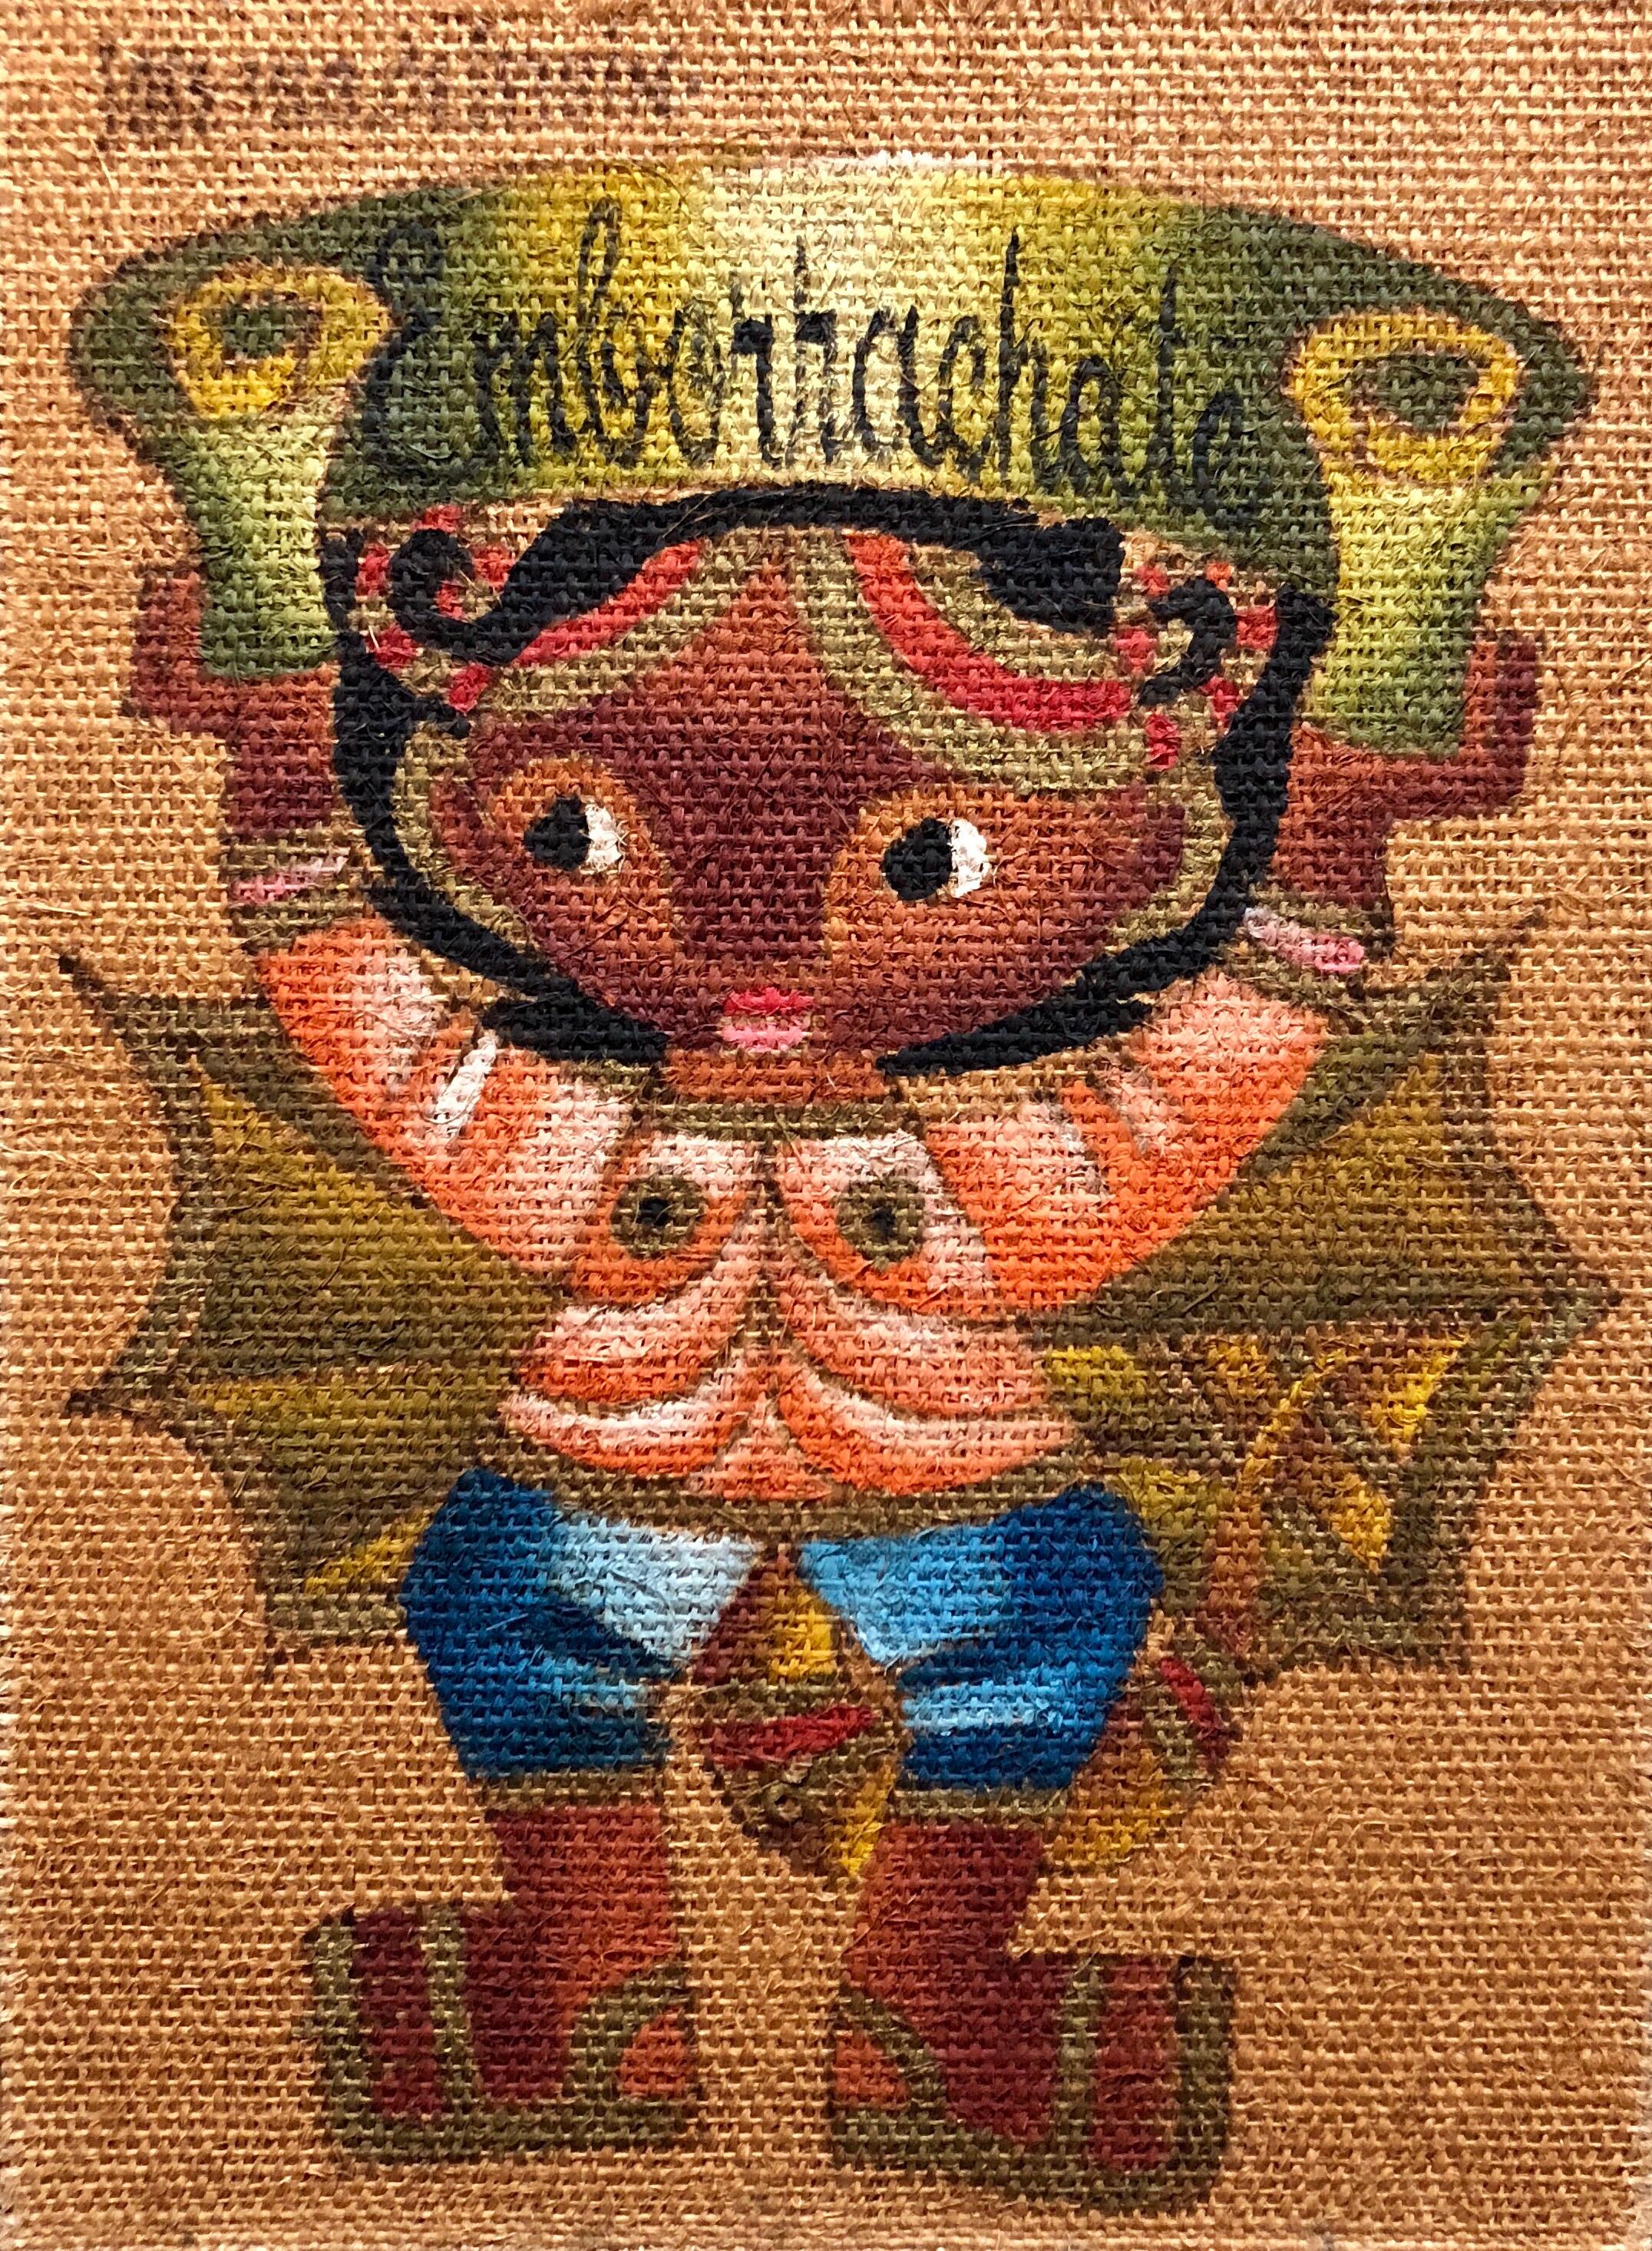 Jose Maria de Servin Figurative Painting - Folk Art Mexican Girl "Emborrachate" Oil Painting on Burlap